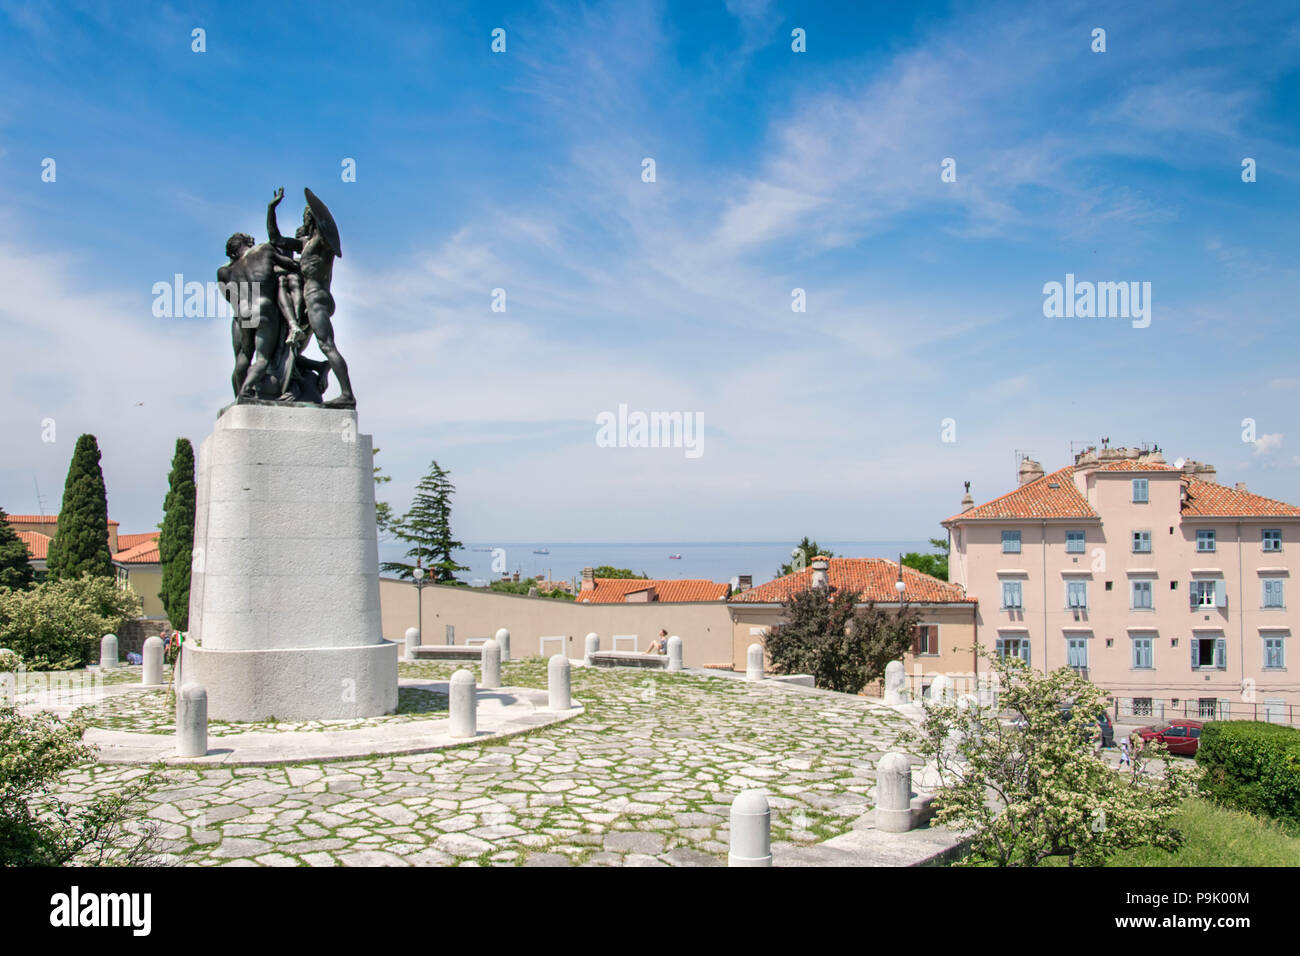 Europe, Italy, Trieste. Monument of Caduti della Prima Guerra Mondiale (monument of World War I casaulities) Stock Photo